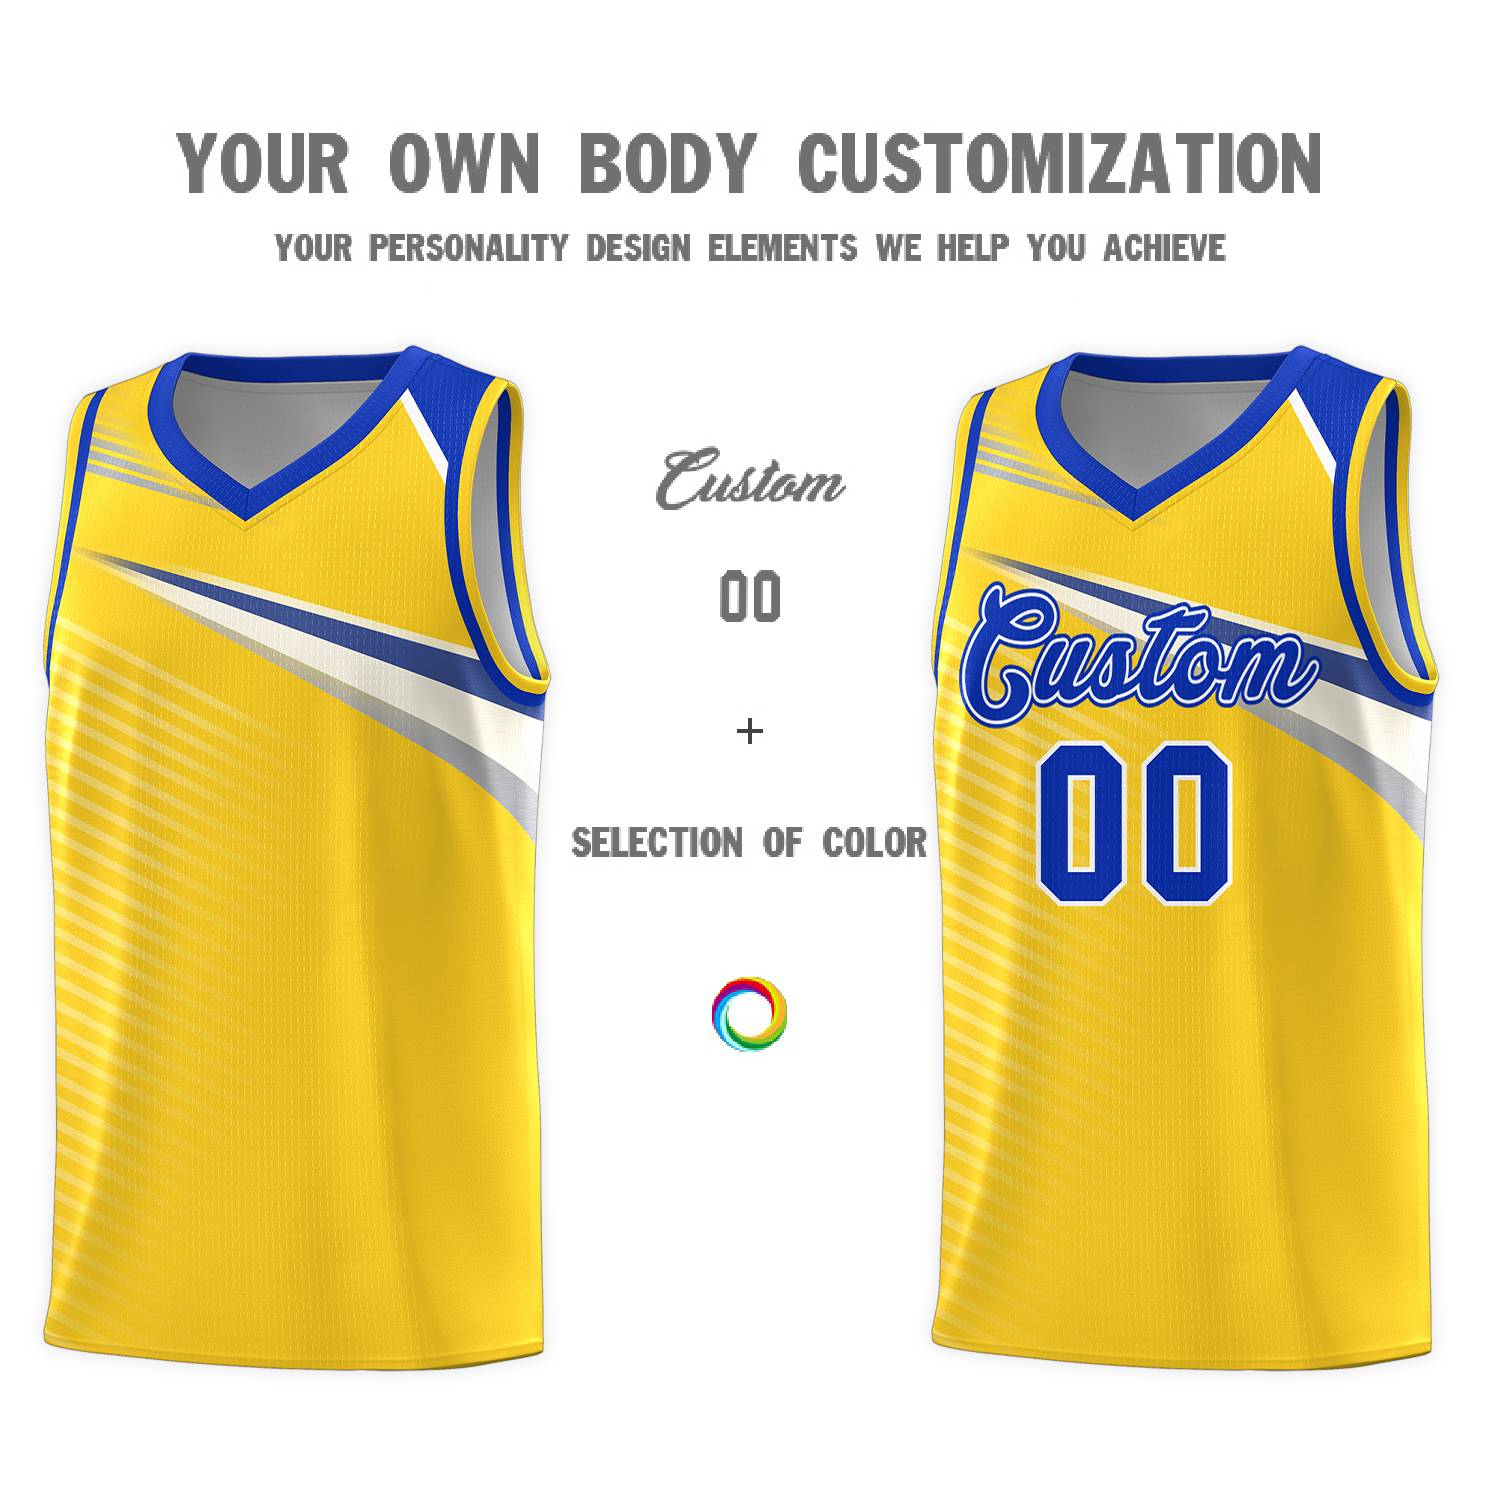 Custom Gold Royal-White Chest Color Block Sports Uniform Basketball Jersey